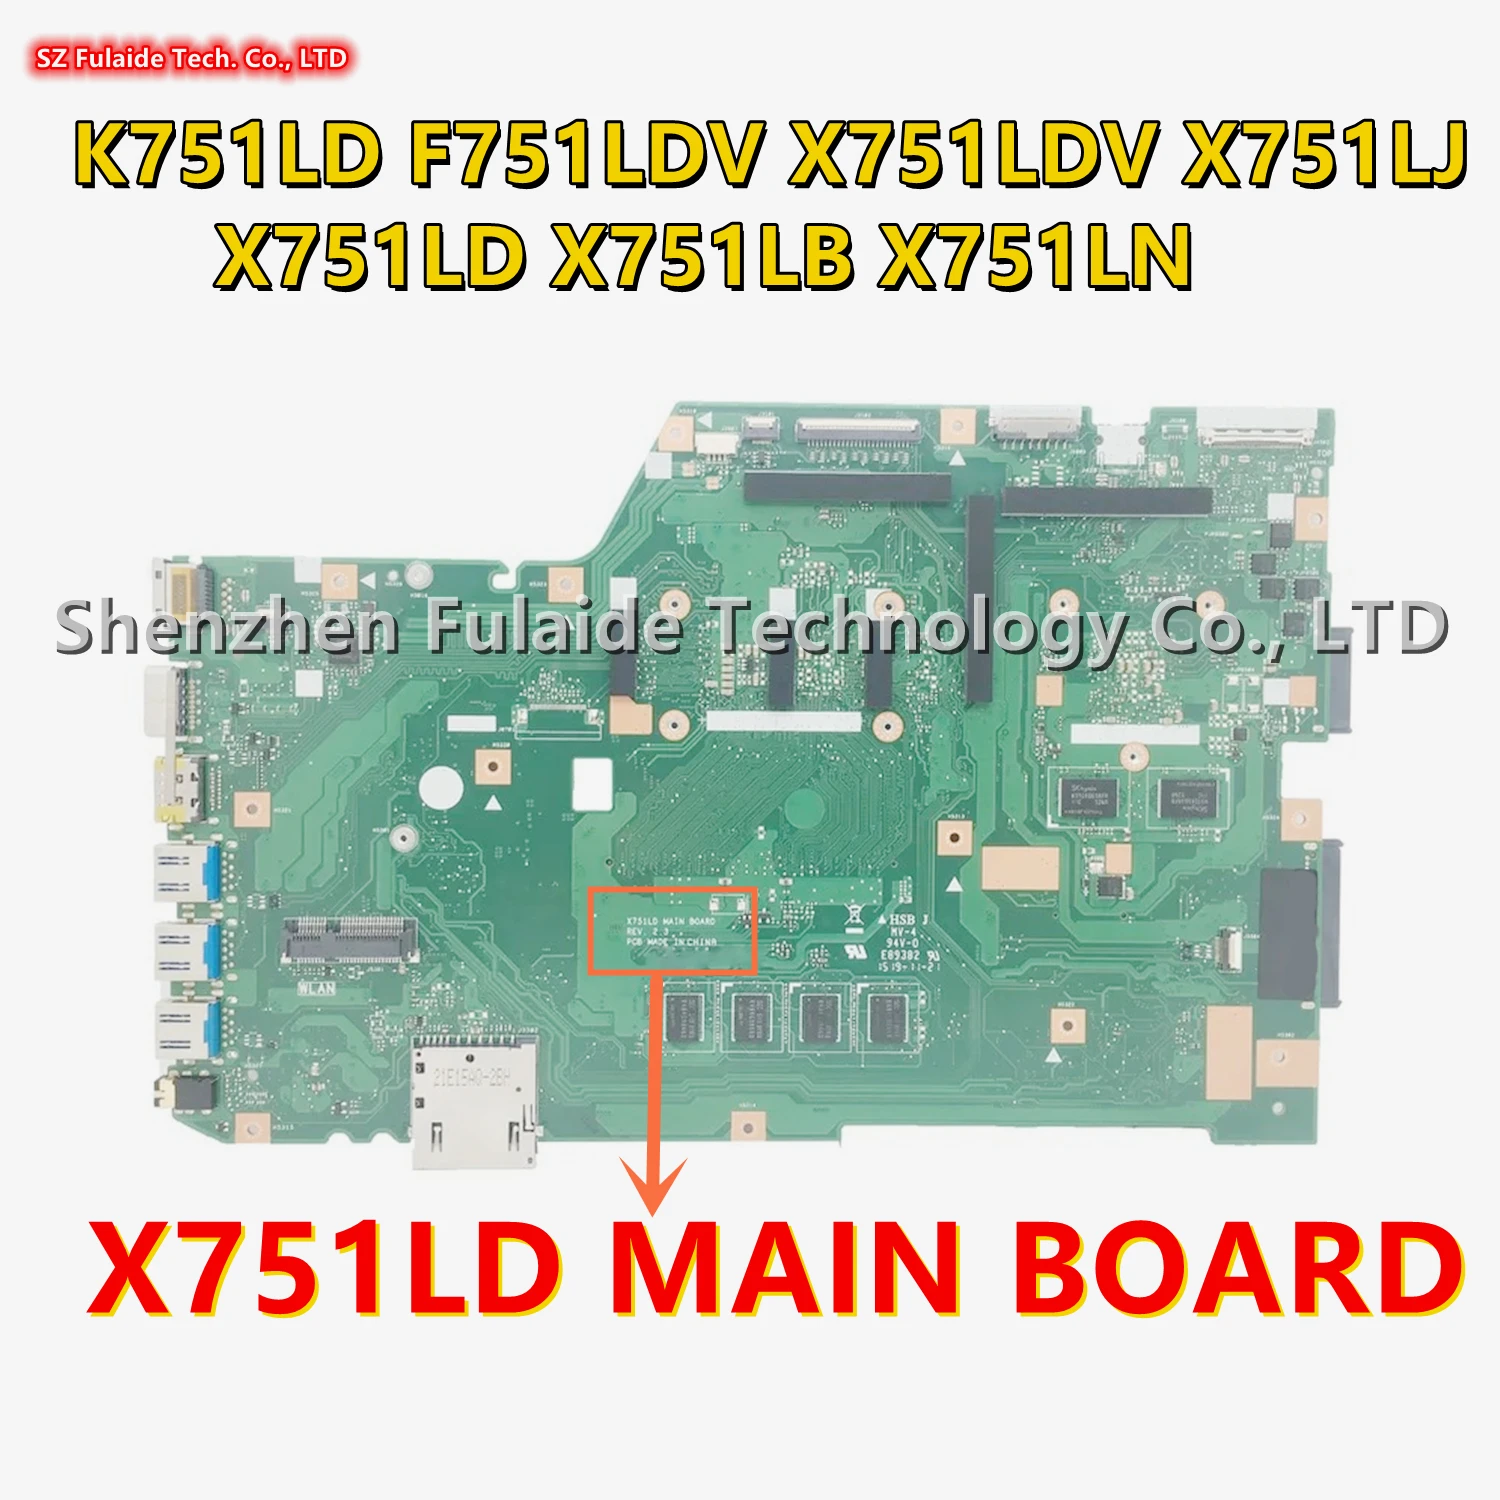 X751LD GLAVNI ODBOR Za ASUS K751LD F751LDV X751LDV X751LJ X751LD X751LB X751LN Prenosni računalnik z Matično ploščo I3 I5, I7 PROCESOR, 2 GB GPU 4 GB-RAM